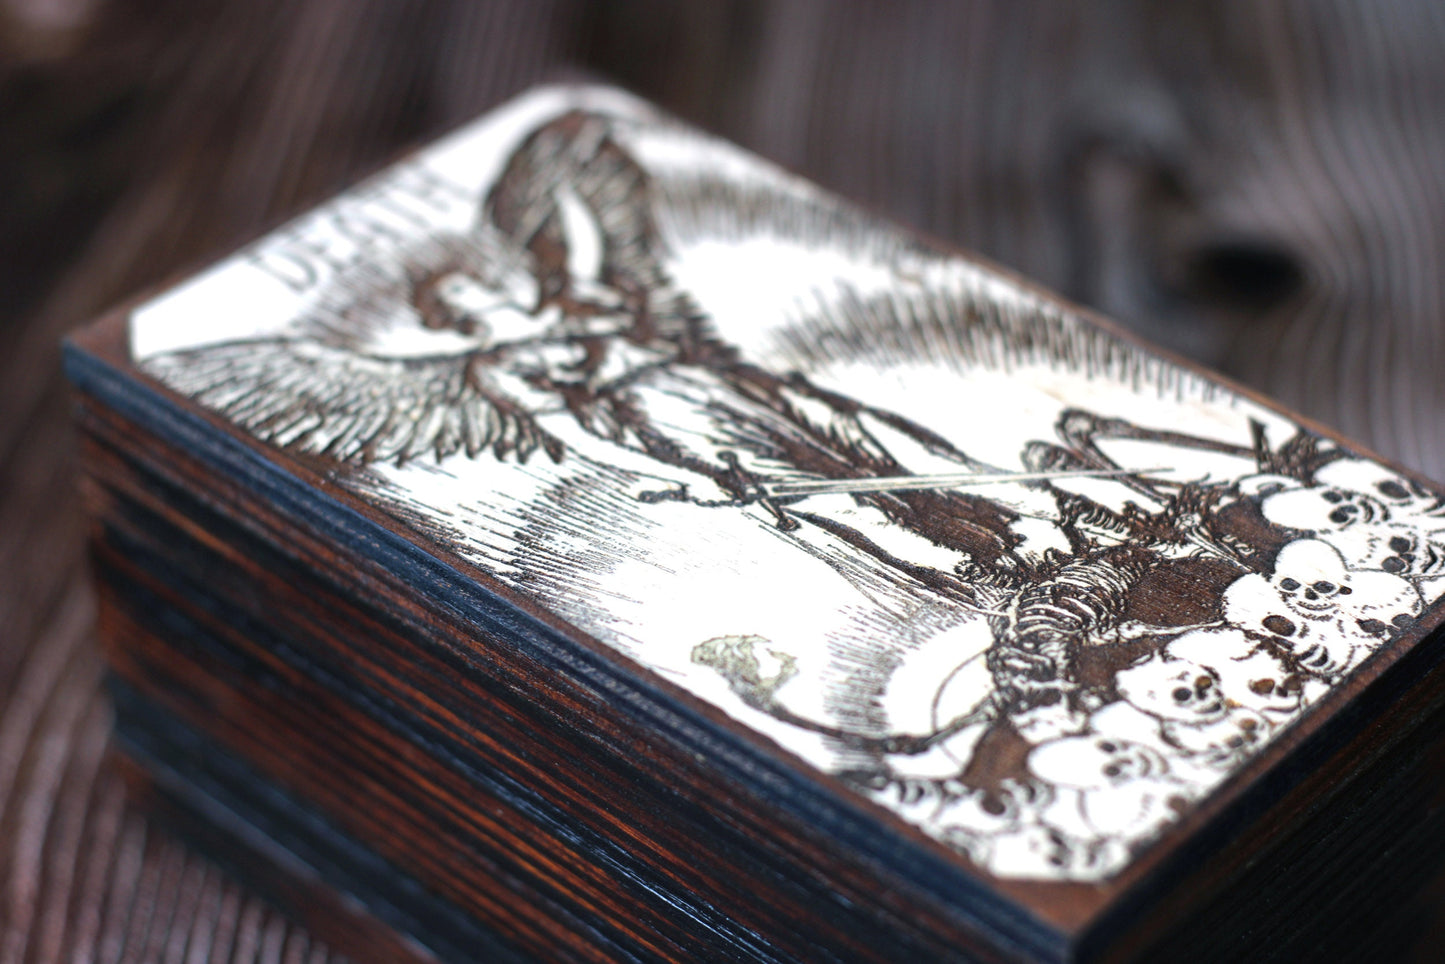 Wooden Tarot card box with death card design. A death card keepsake box for Tarot cards or jewellery box, custom Tarot deck for Wicca